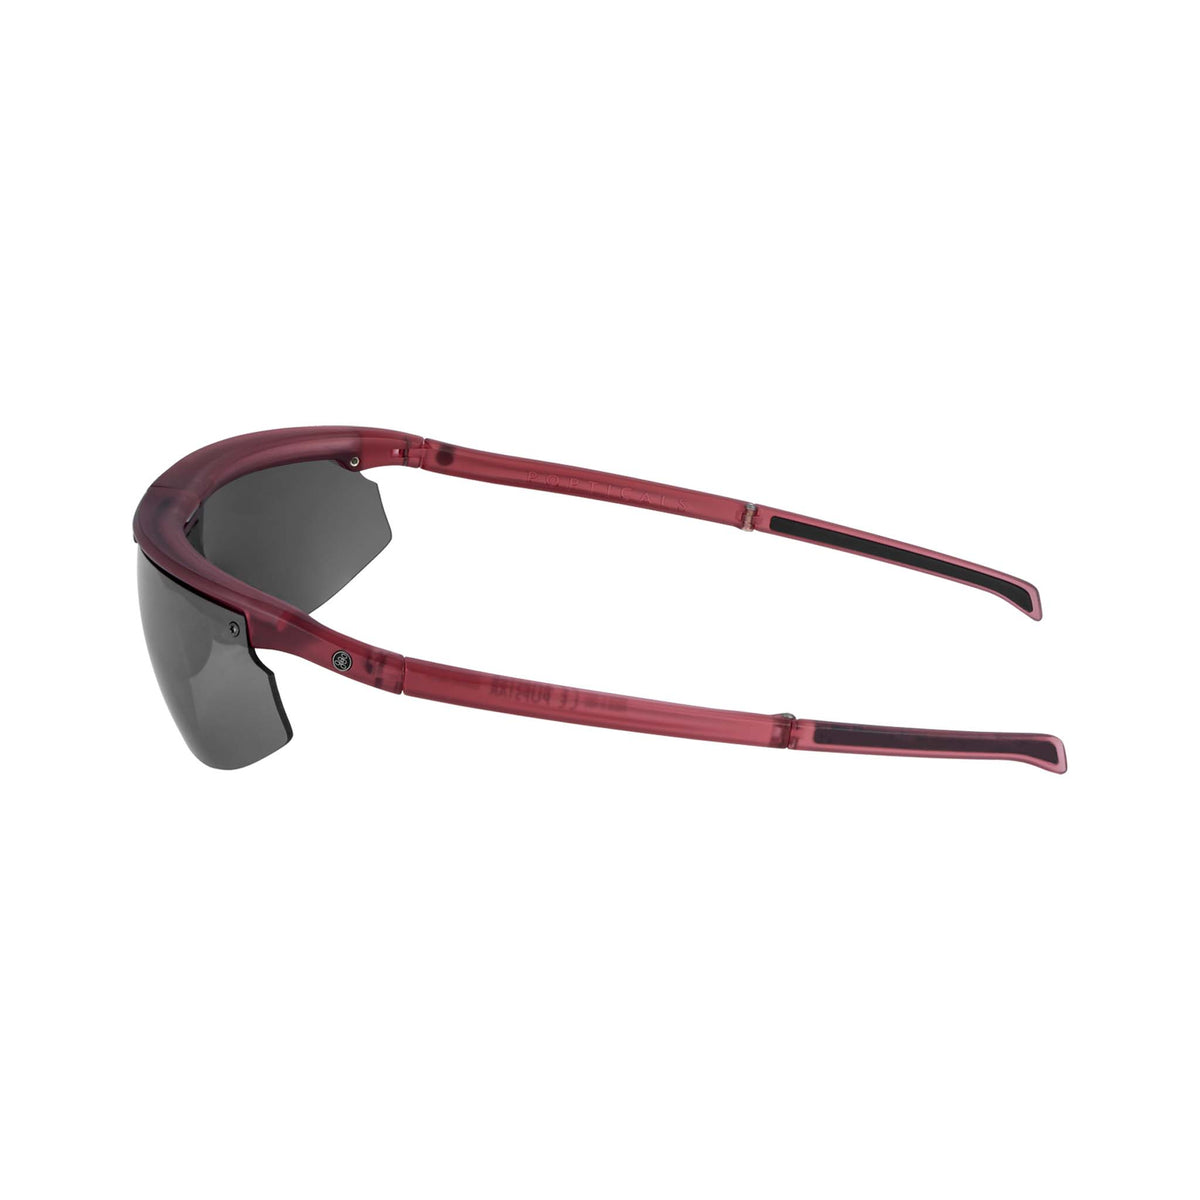 Popticals, Premium Compact Sunglasses, PopStar, 010040-BMUN, Polarized Sunglasses, Matte Black Frame, Gray Lenses w/Blue Mirror Finish, Side View